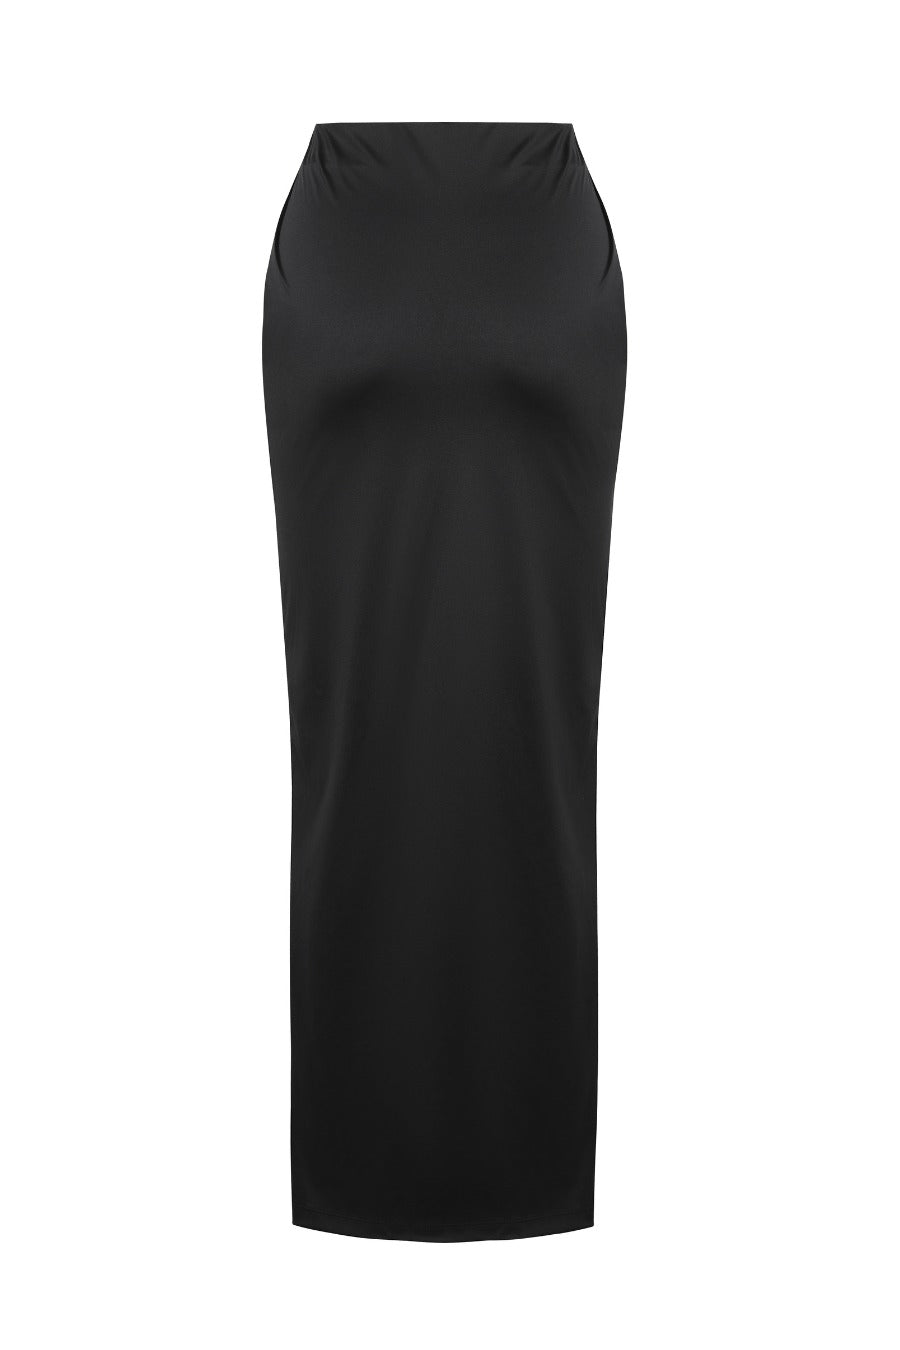 Ava Satin Skirt - Black Contour Clothing